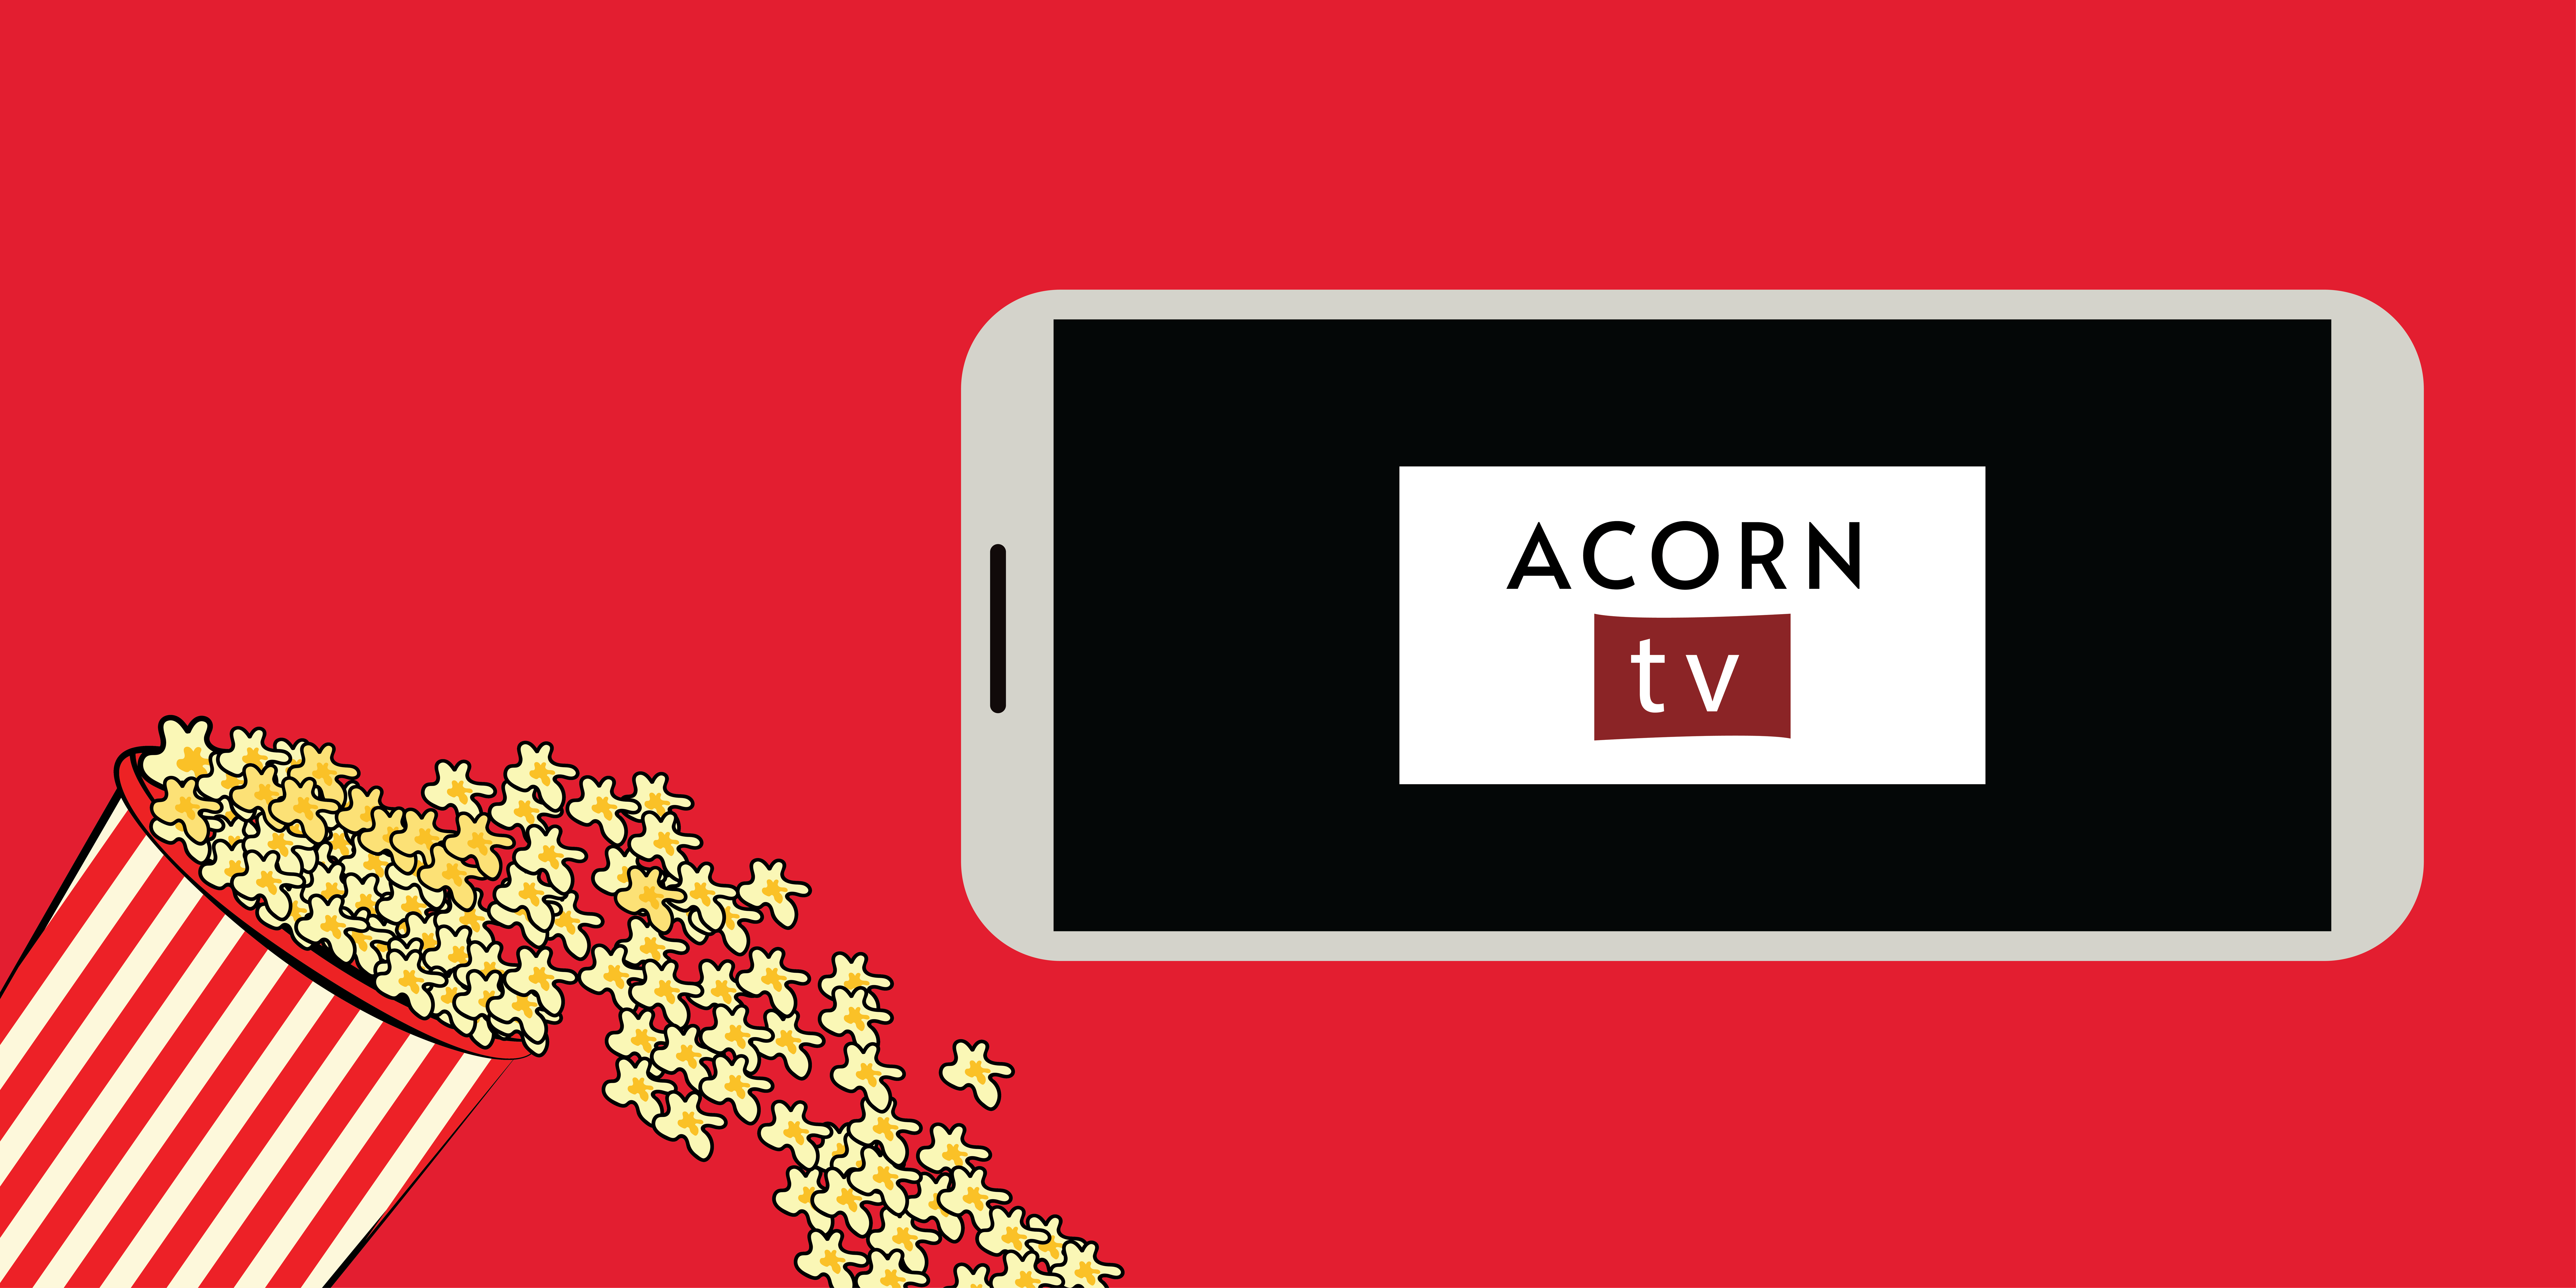 Acorn tv illustration